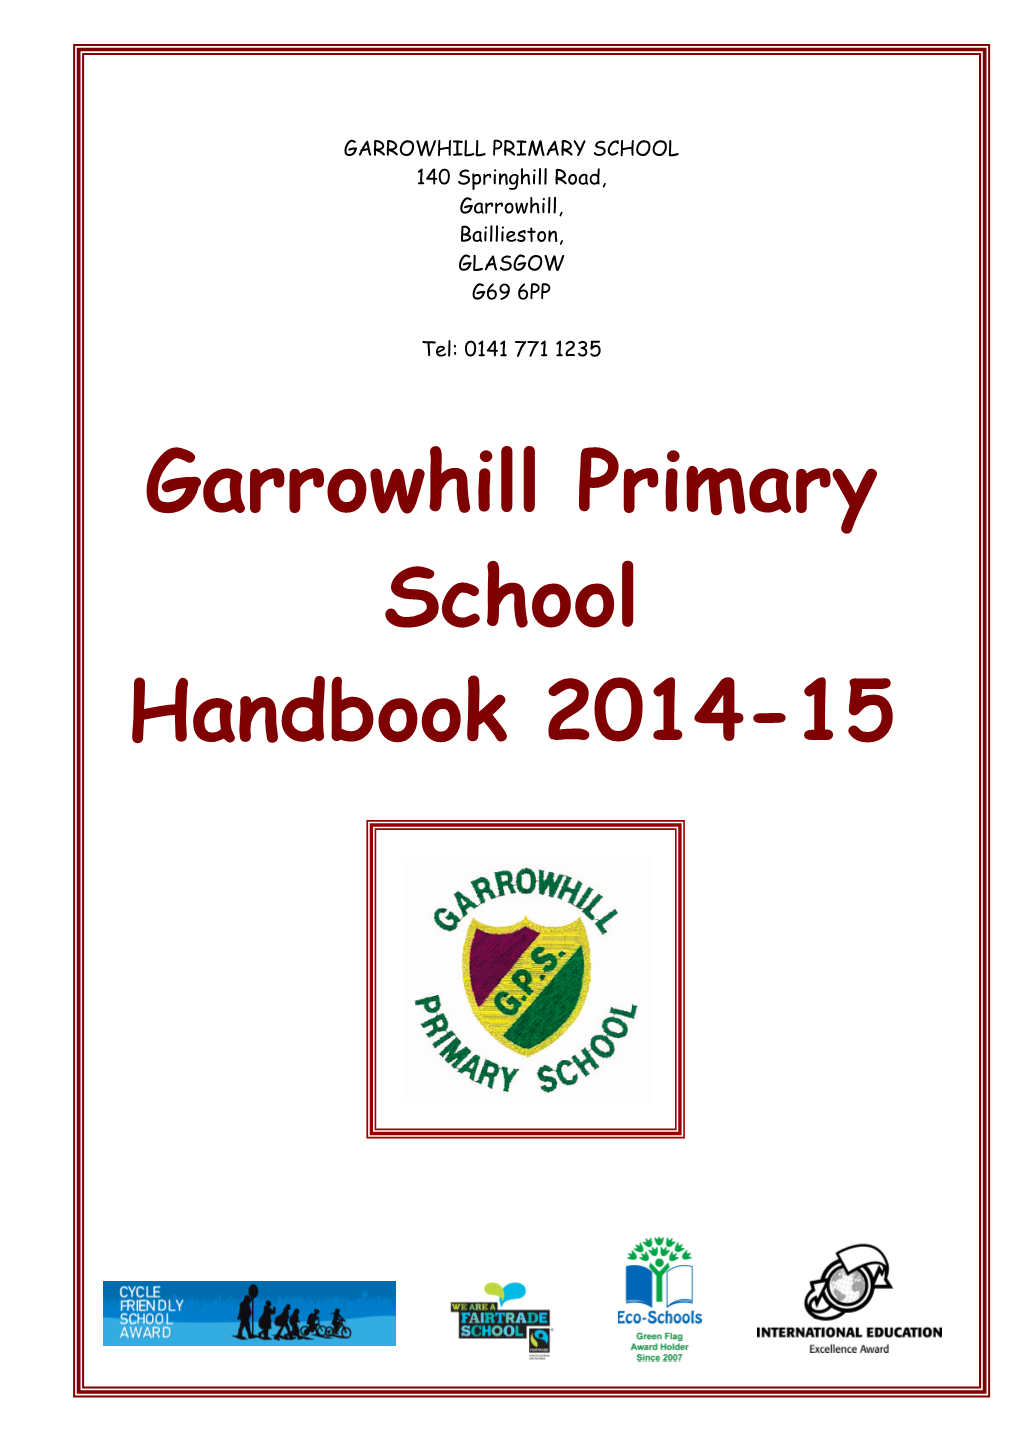 Garrowhill Primary School Handbook 2014-15